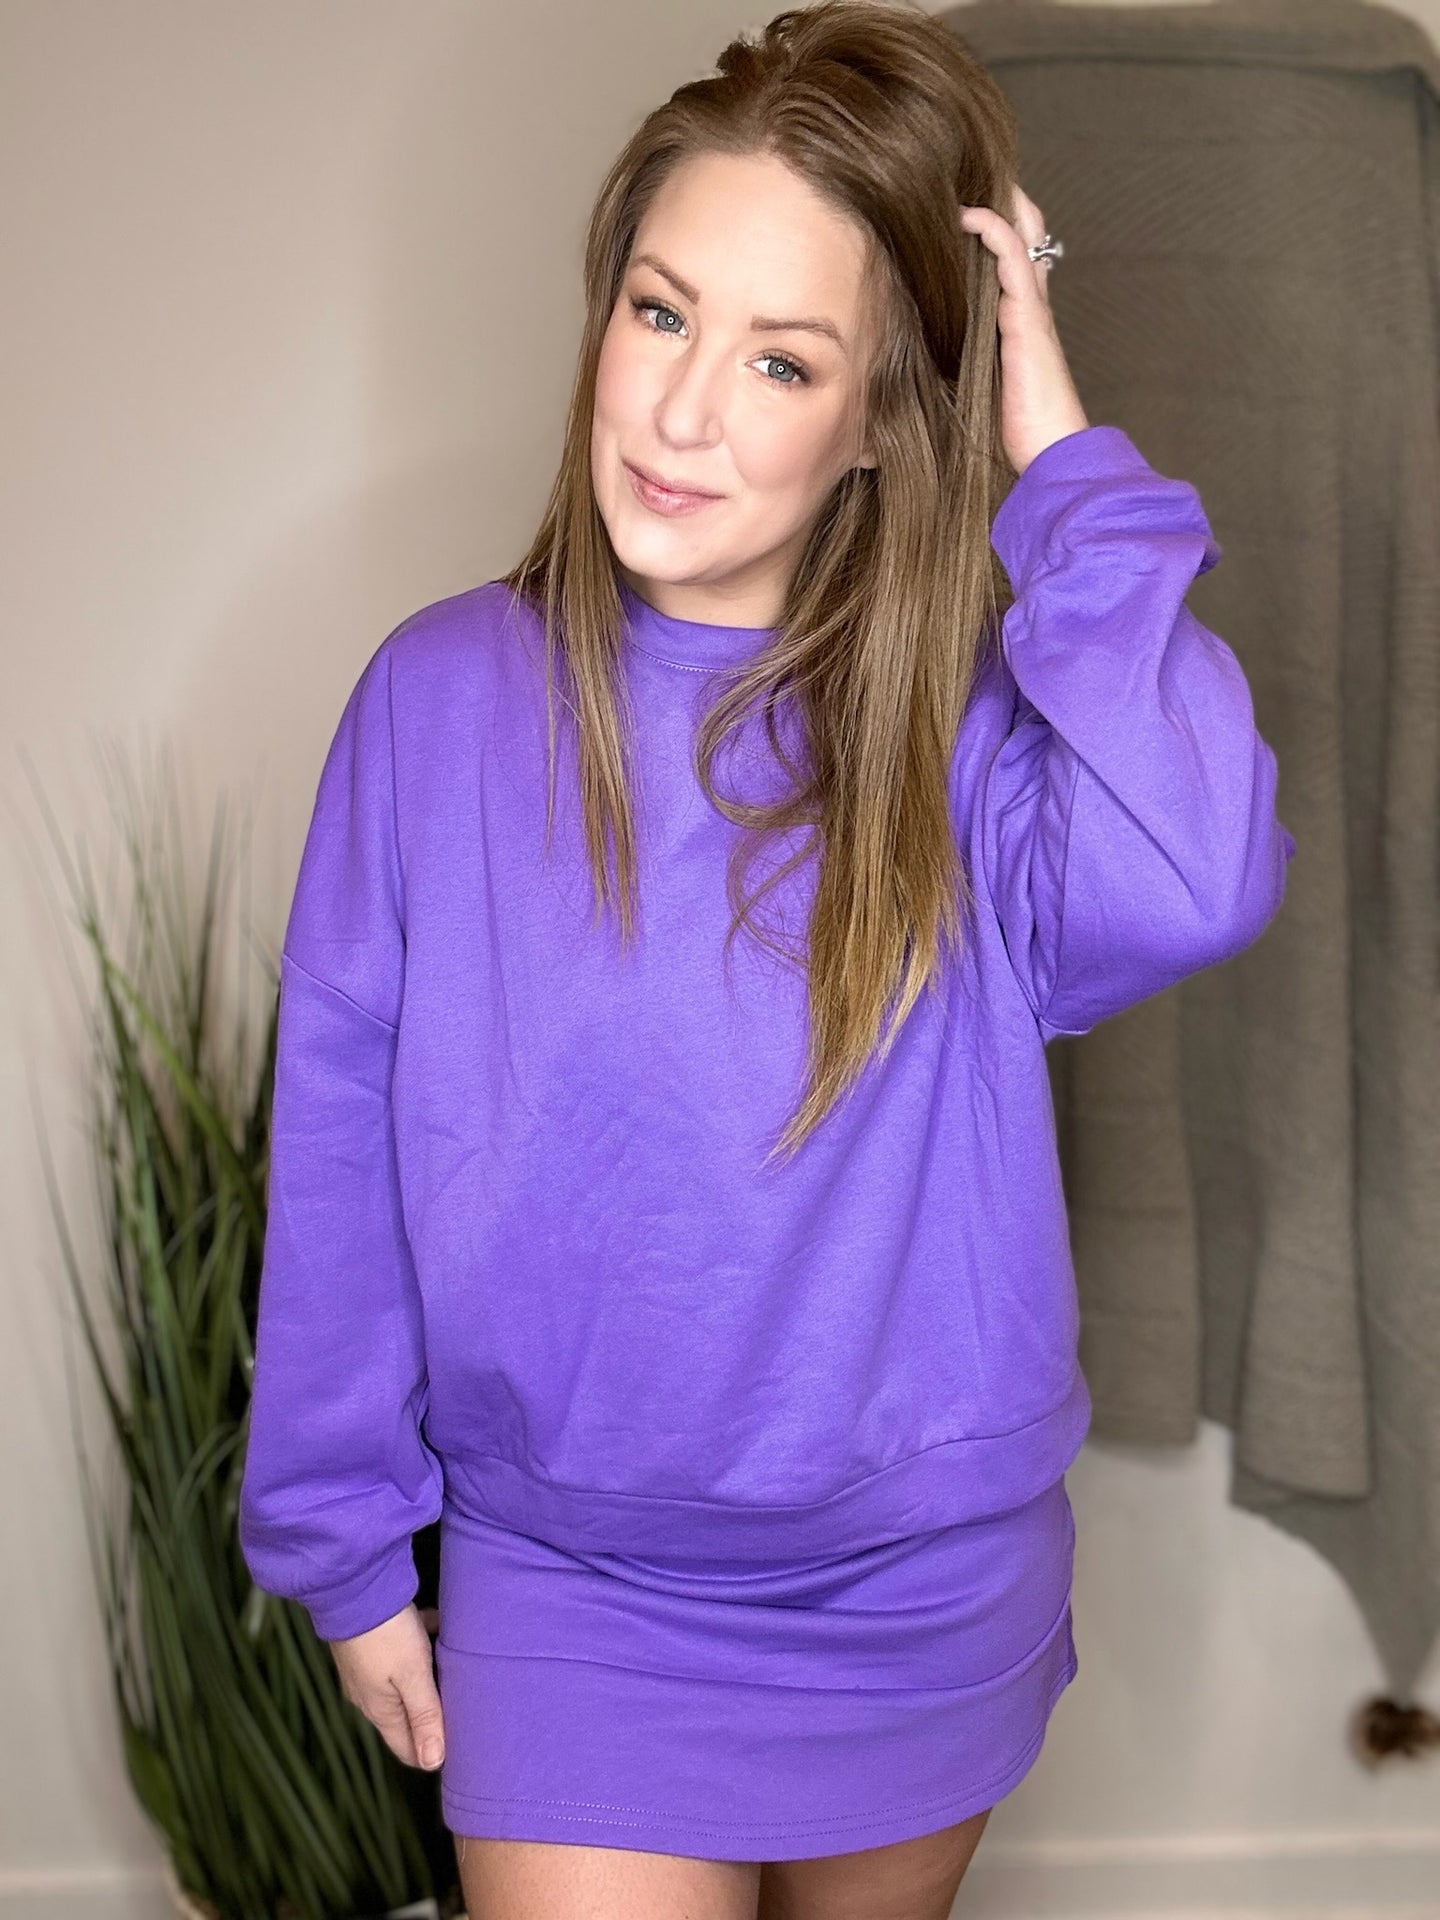 Purple Crewneck Sweatshirt